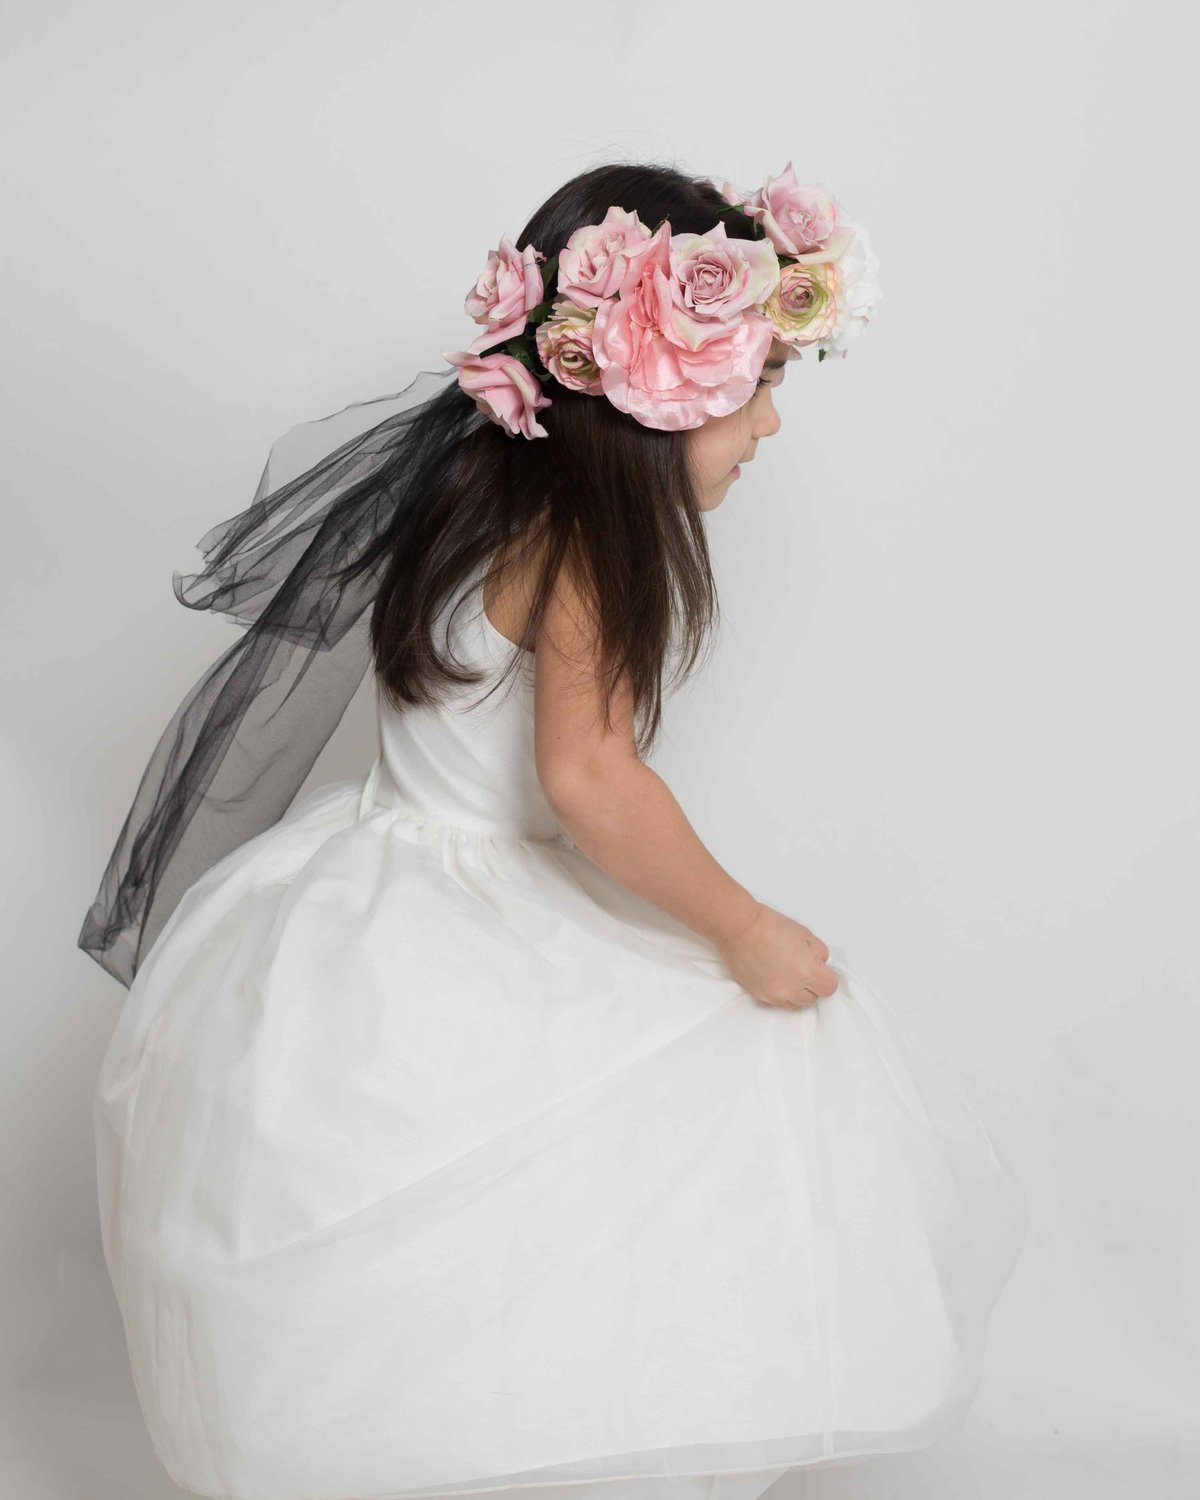 photoshoo-kids-girl-floral-headpiece-white-dress-photography-debbie-steeper